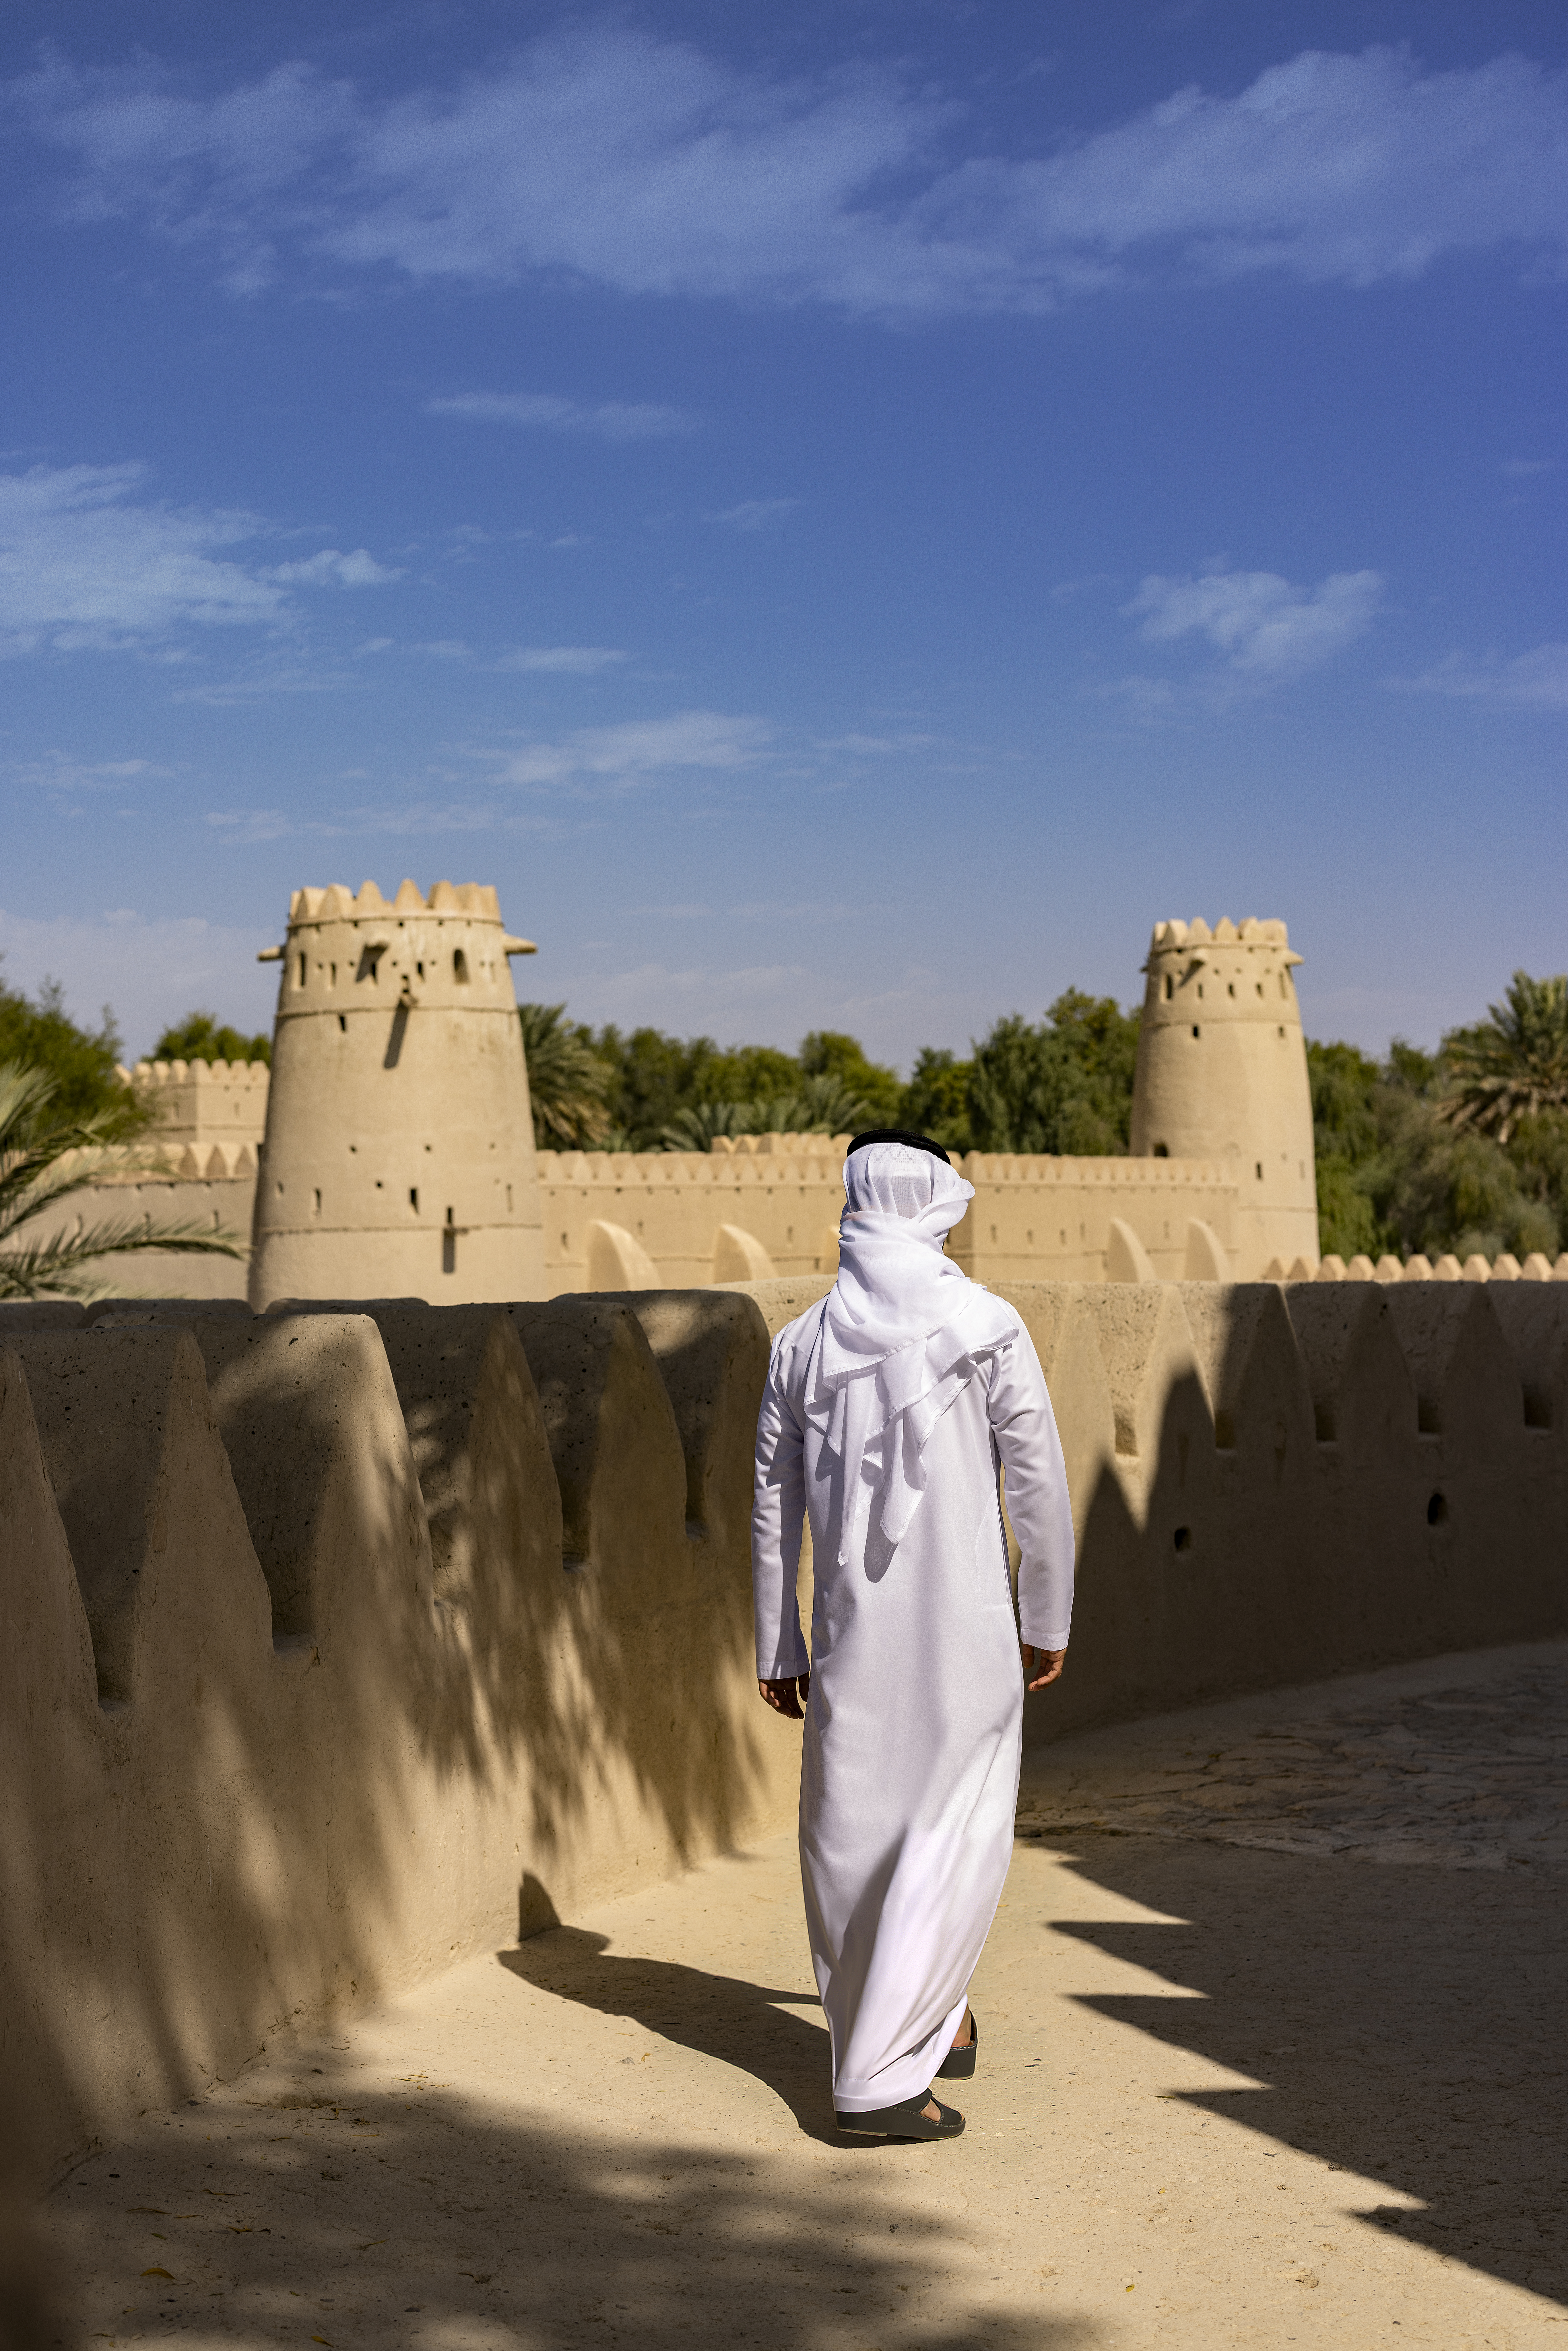 Explore the forts of Al Ain